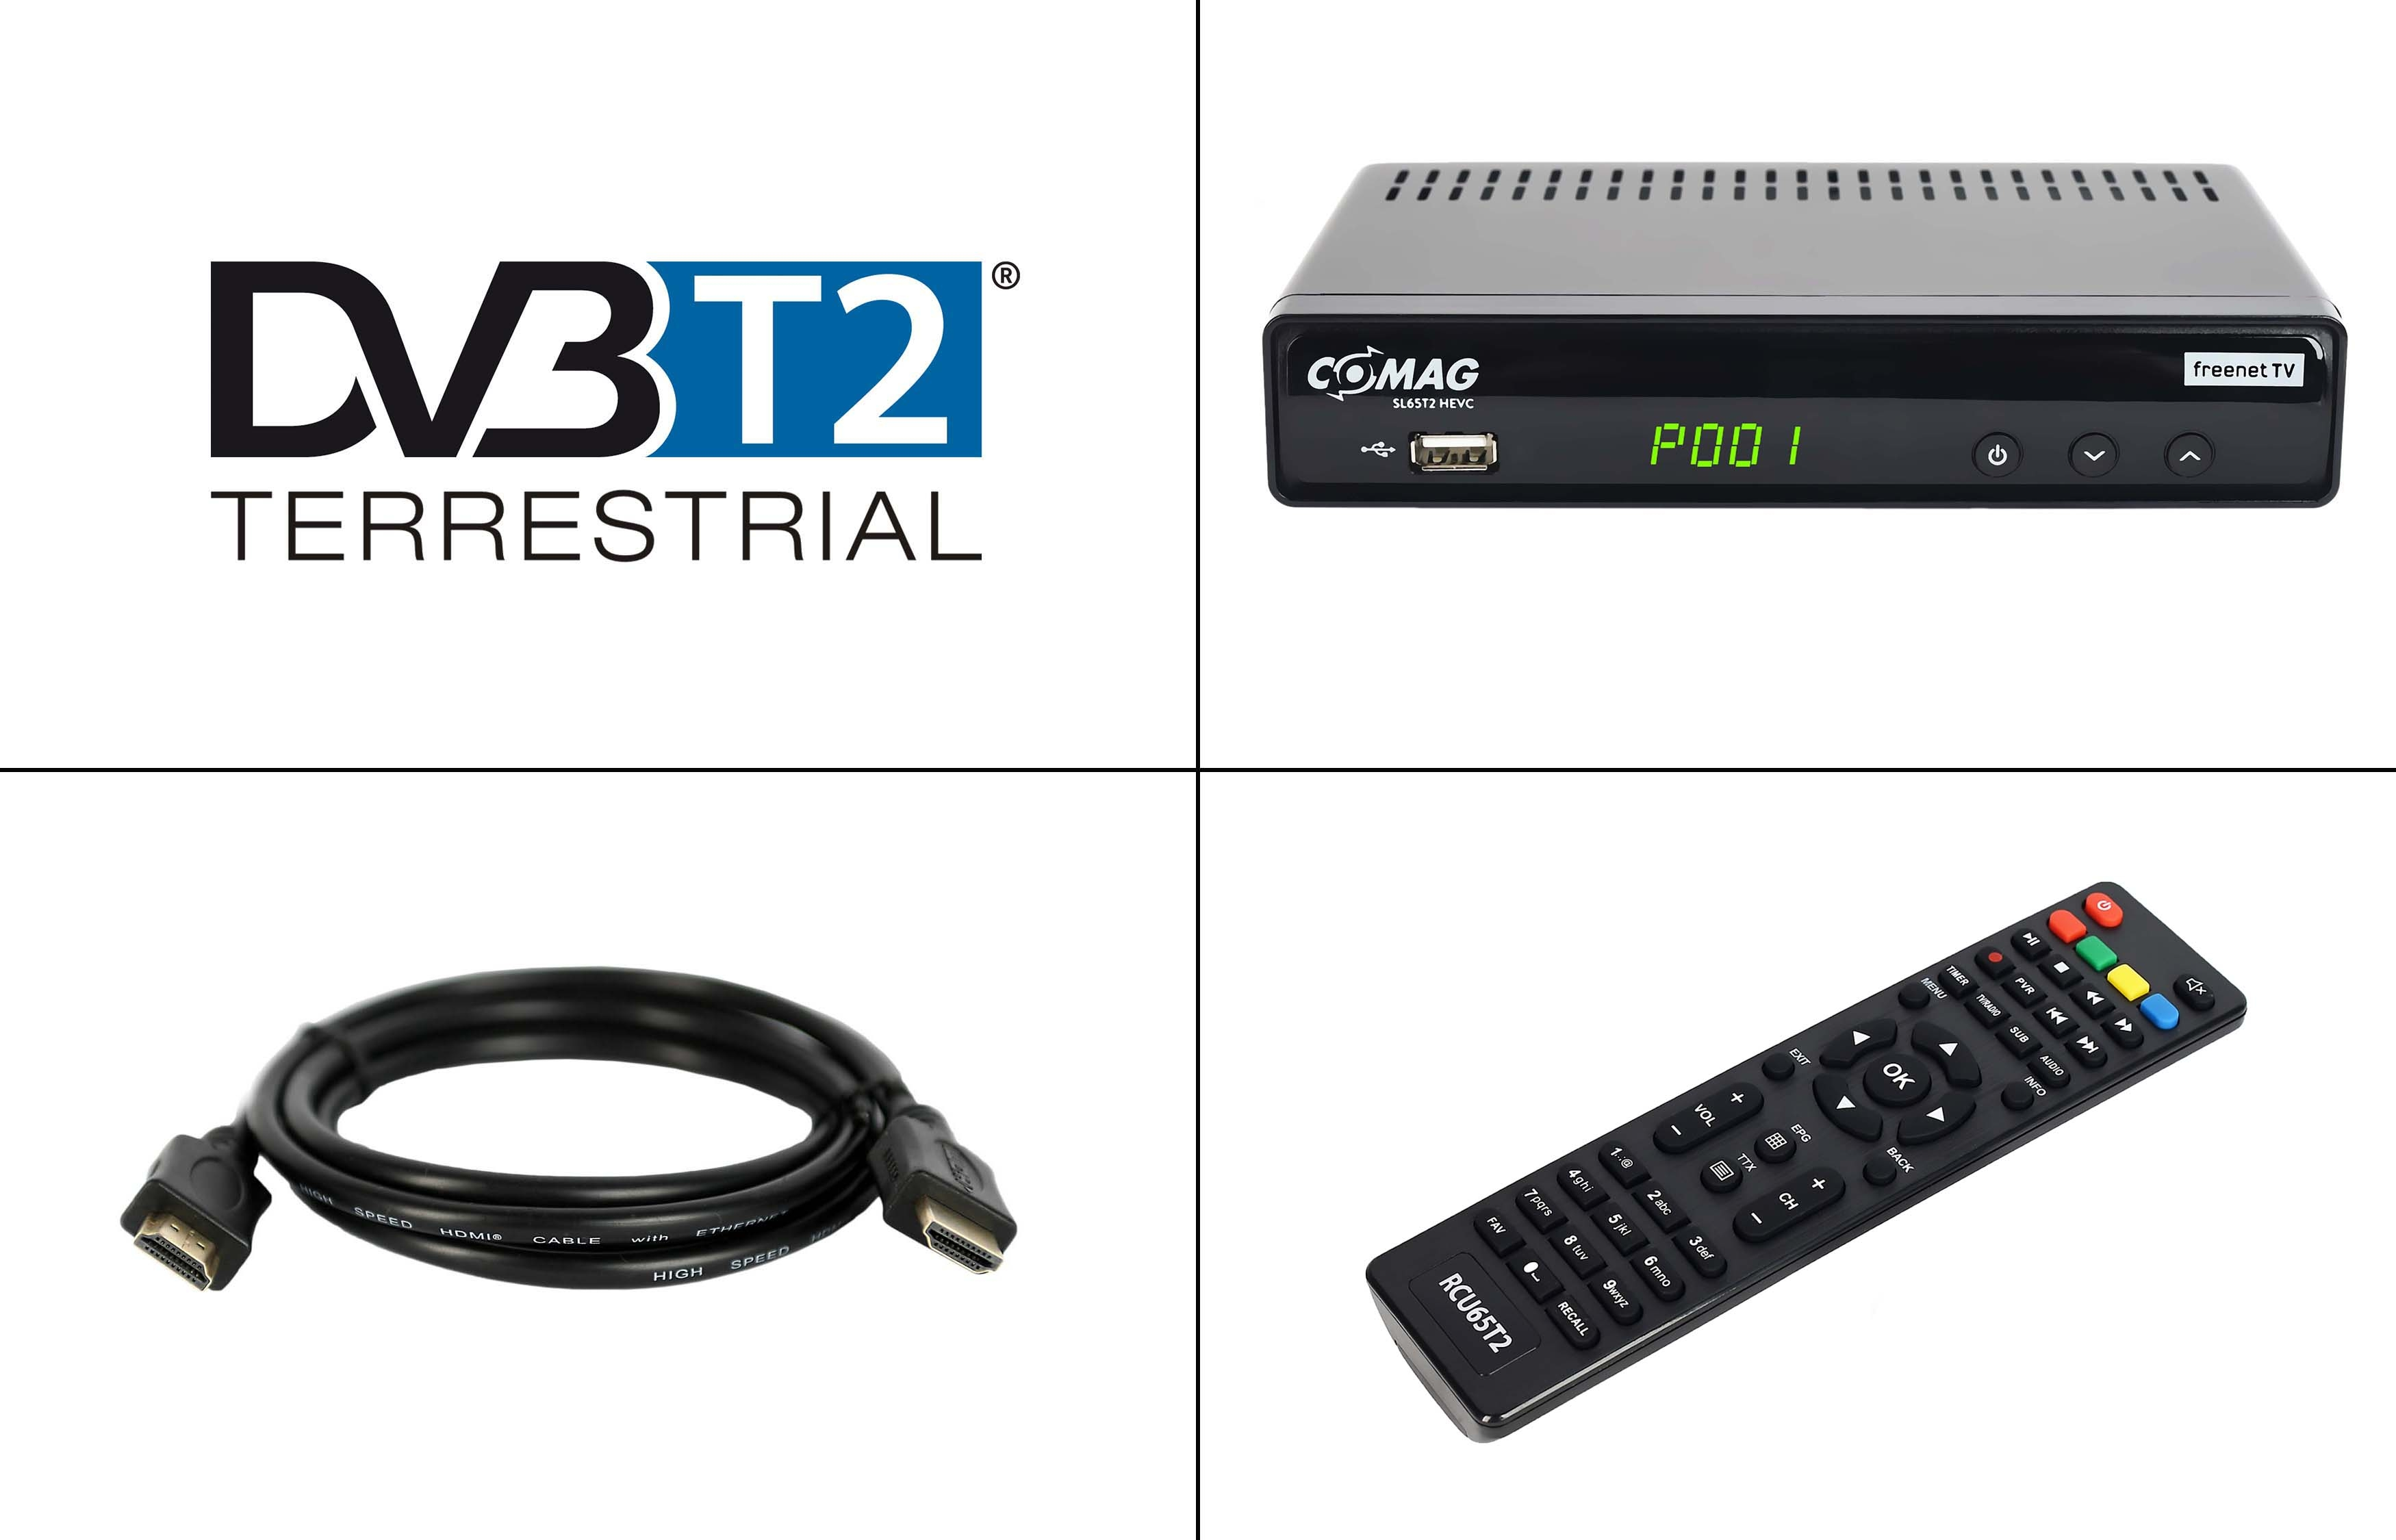 COMAG SL65T2 HDMI (H.265), (H.264), schwarz) DVB-T2 DVB-T, Bundel (HDTV, DVB-T-Receiver PVR-Funktion, DVB-T2